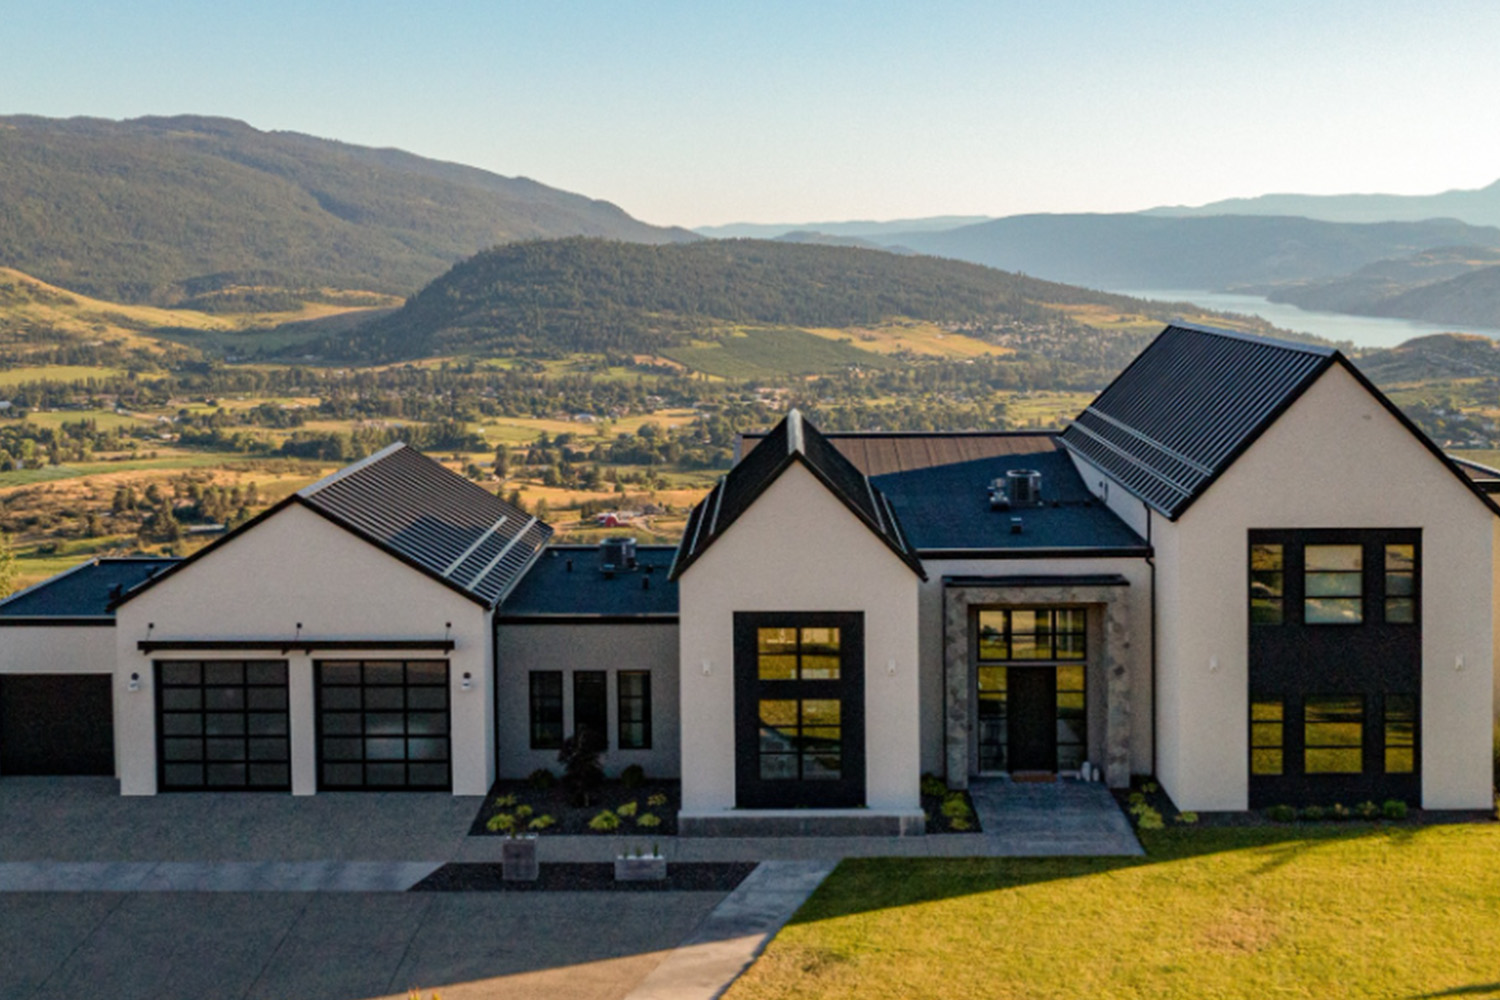 modern custom home overlooking scenic mountain landscape. vernon builder.